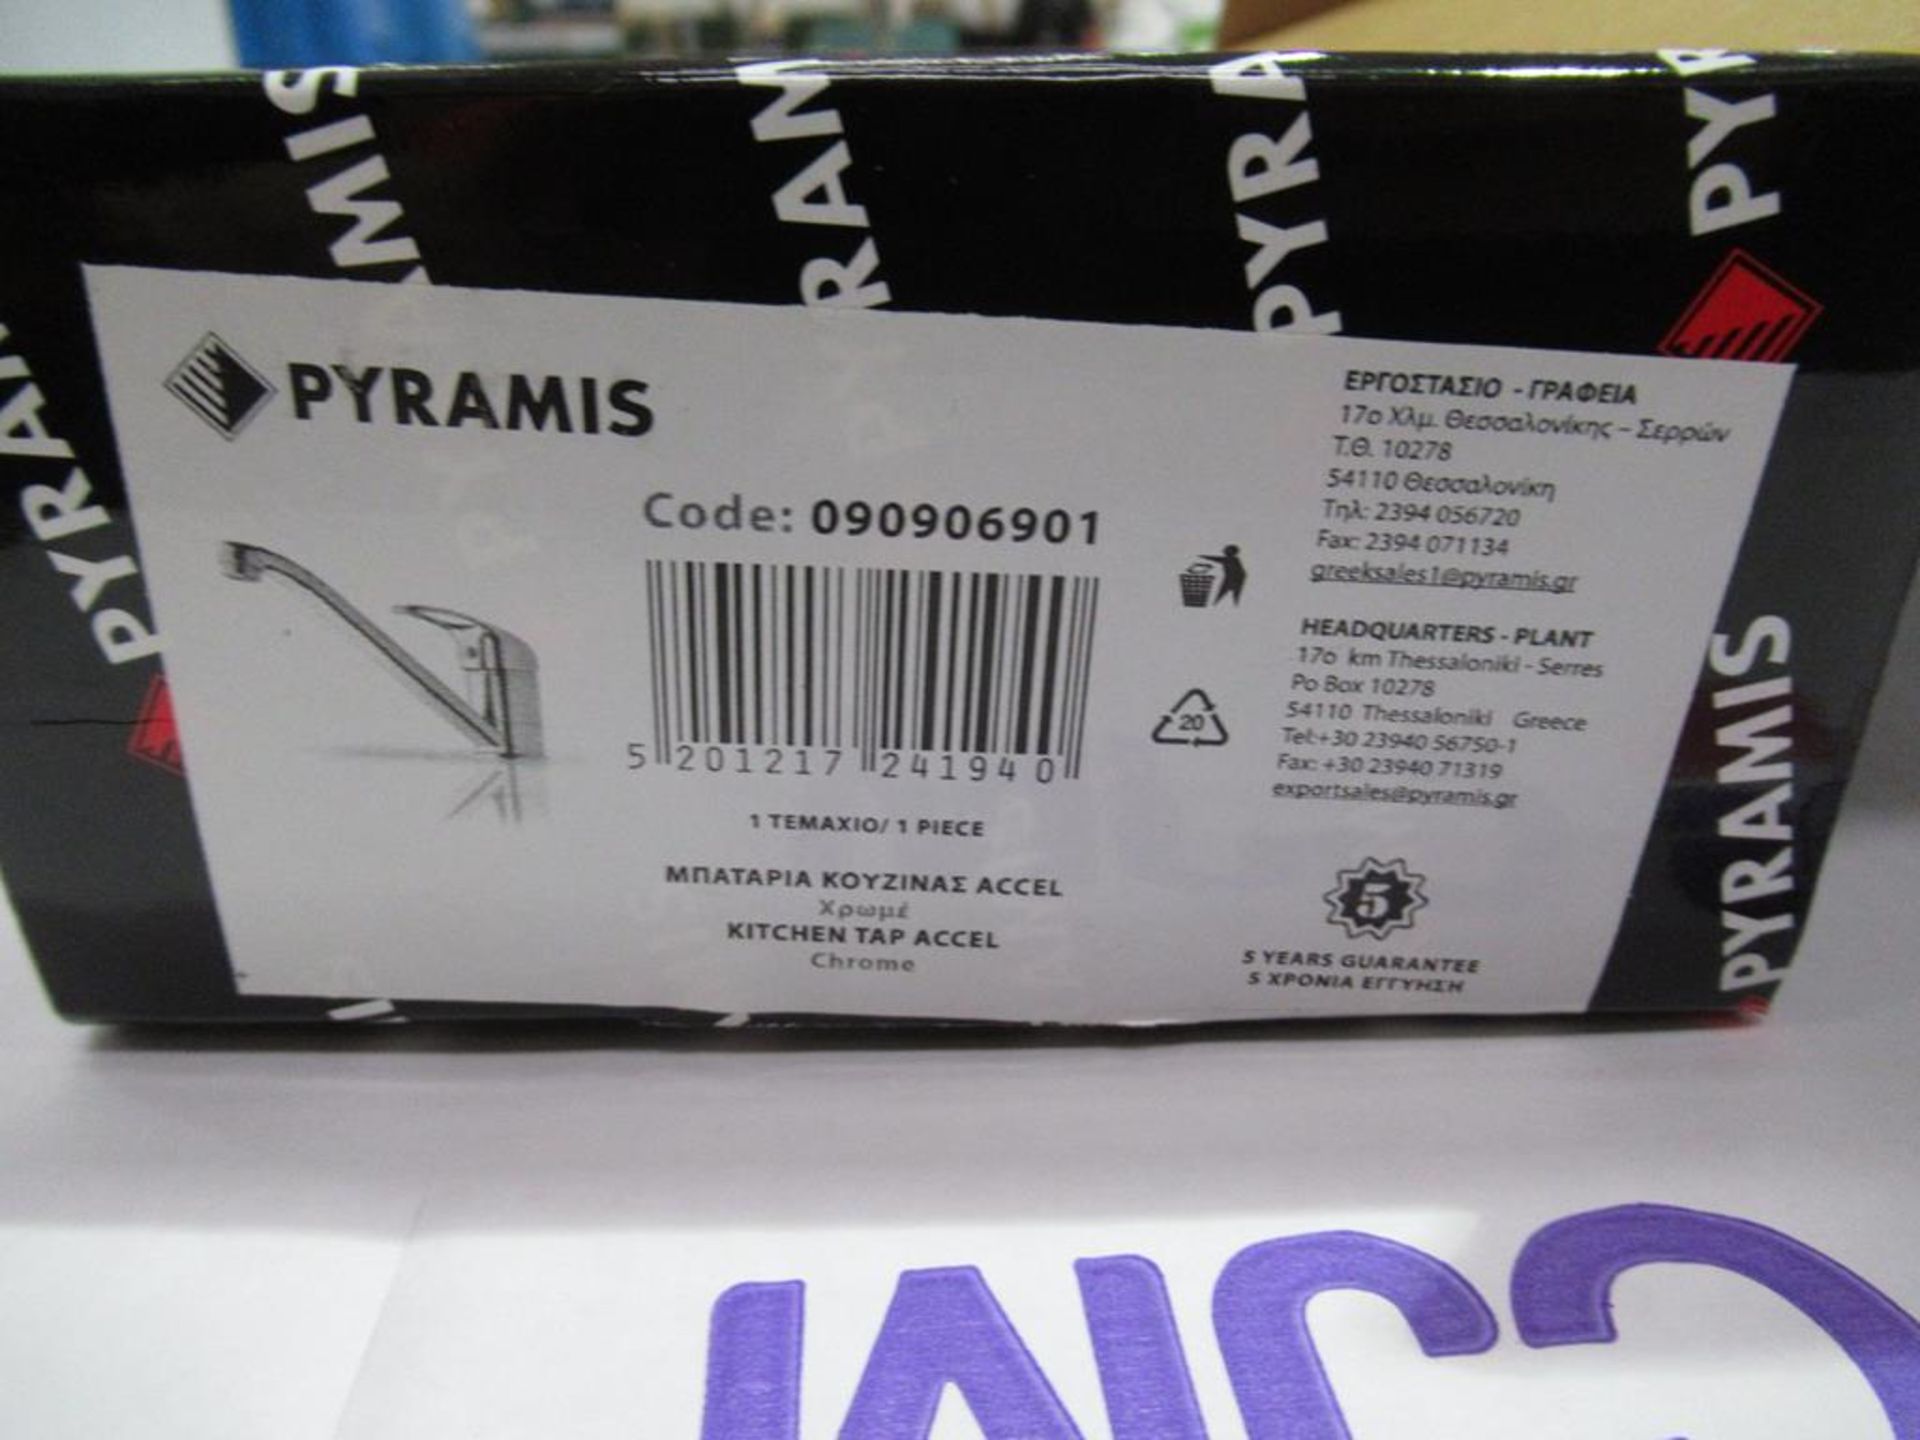 Pyramis Chrome Mixer Taps - Image 2 of 3